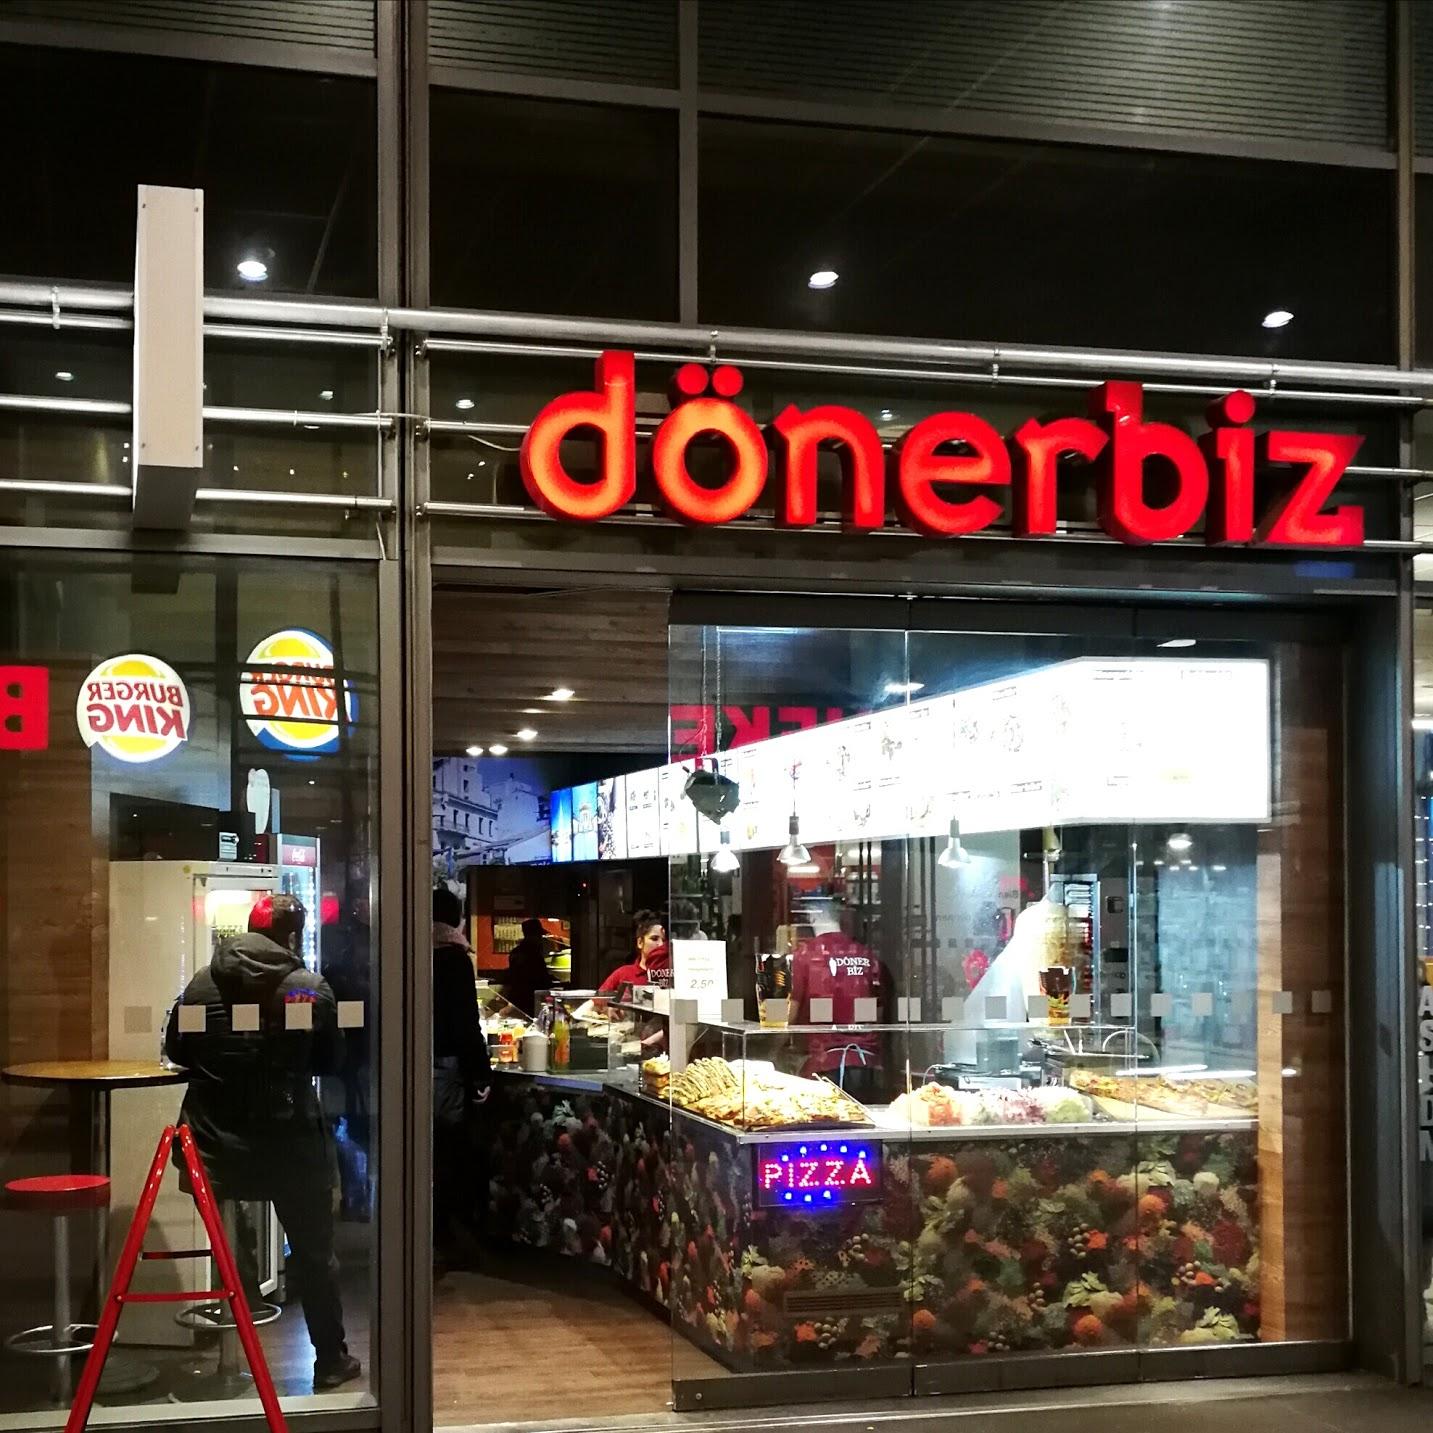 Restaurant "Döner Biz" in Berlin